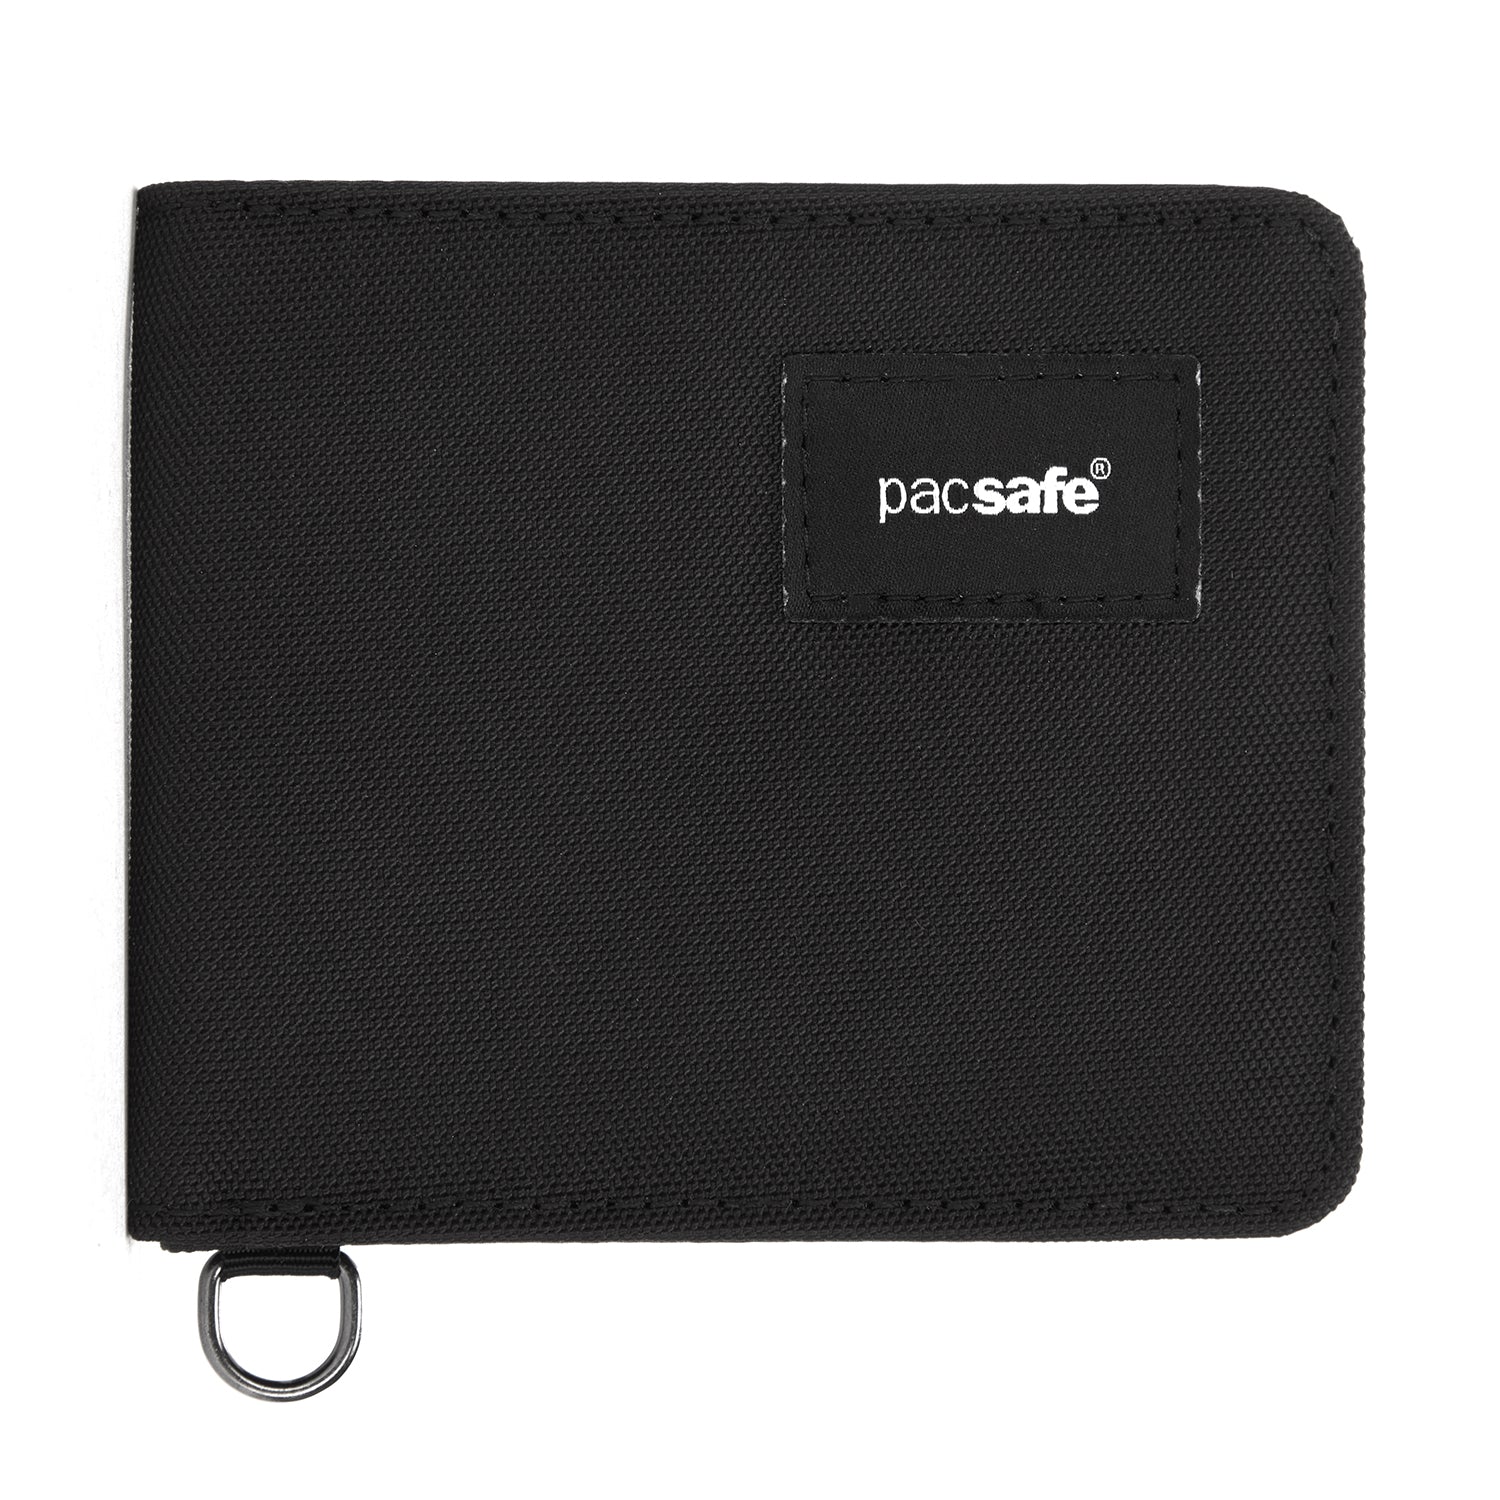 Pacsafe Wallet Safe